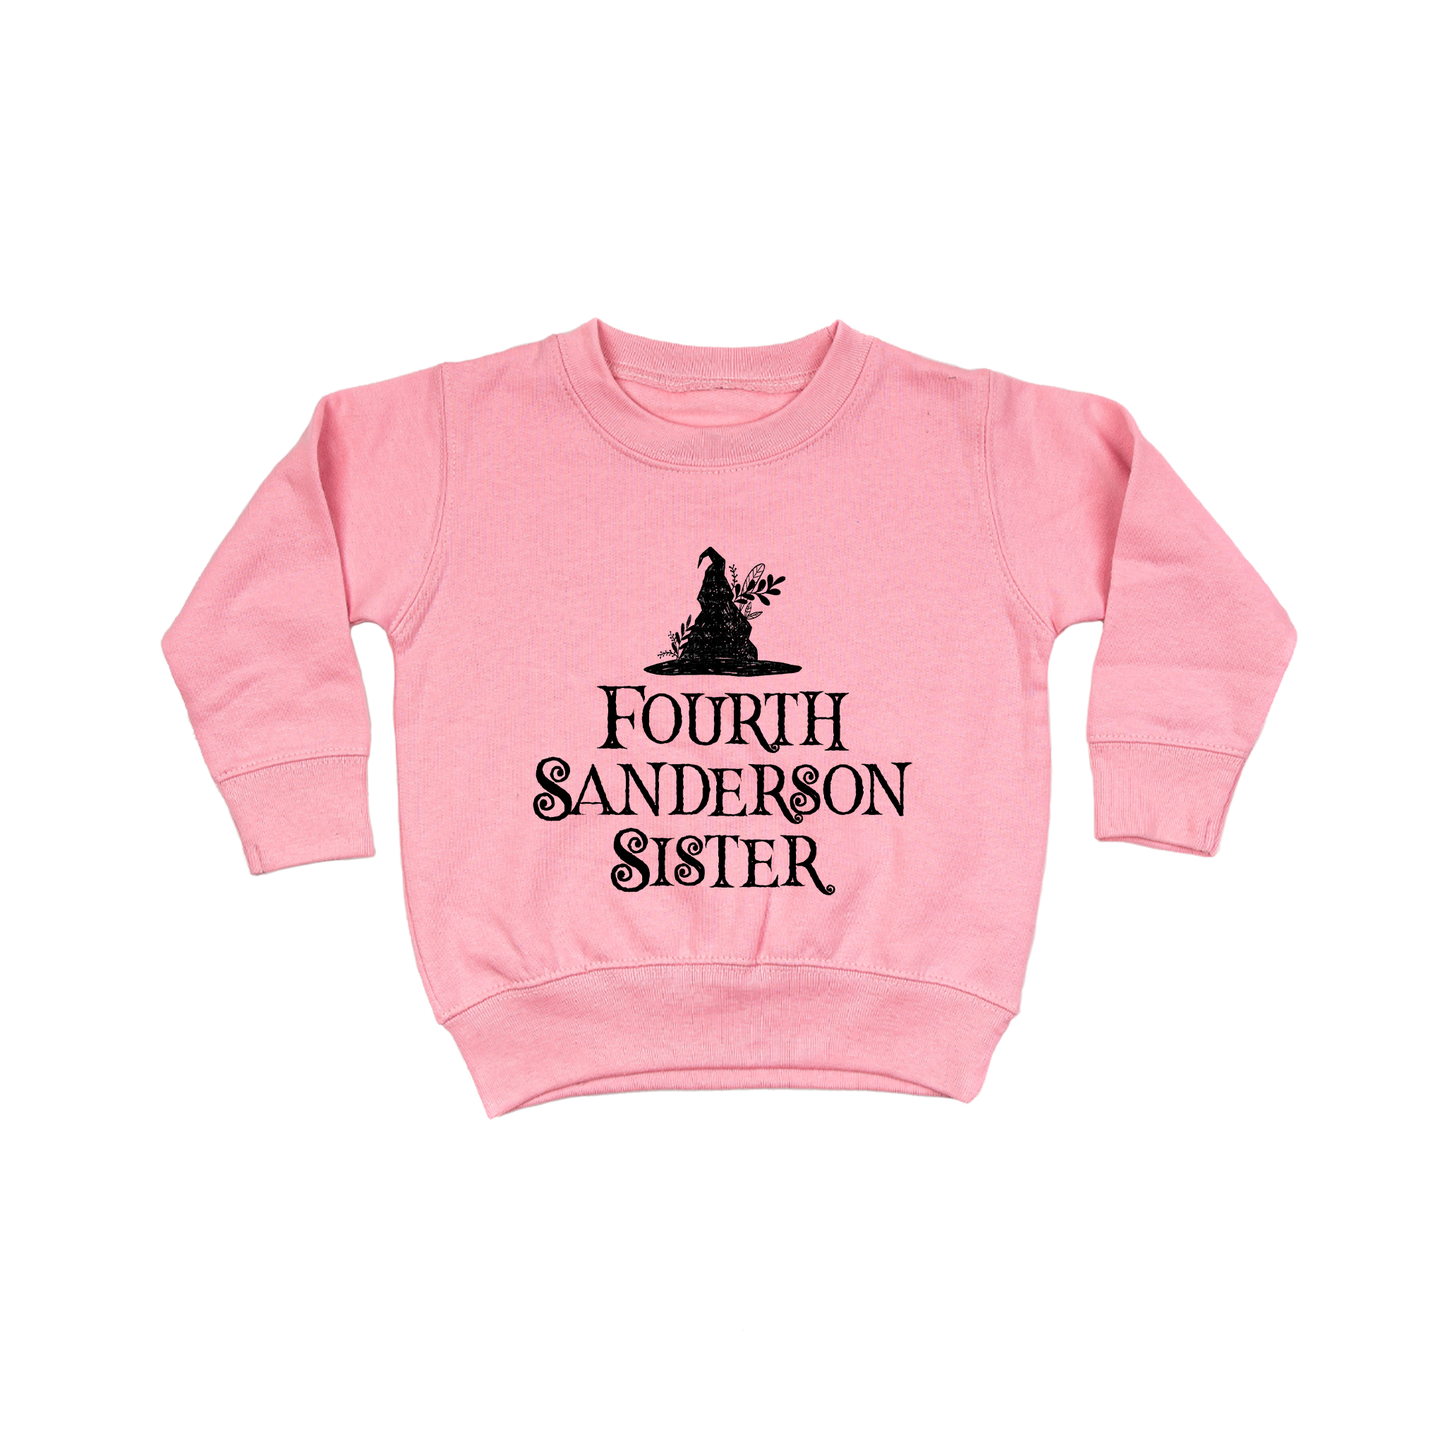 Fourth Sanderson Sister (Black) - Kids Sweatshirt (Pink)